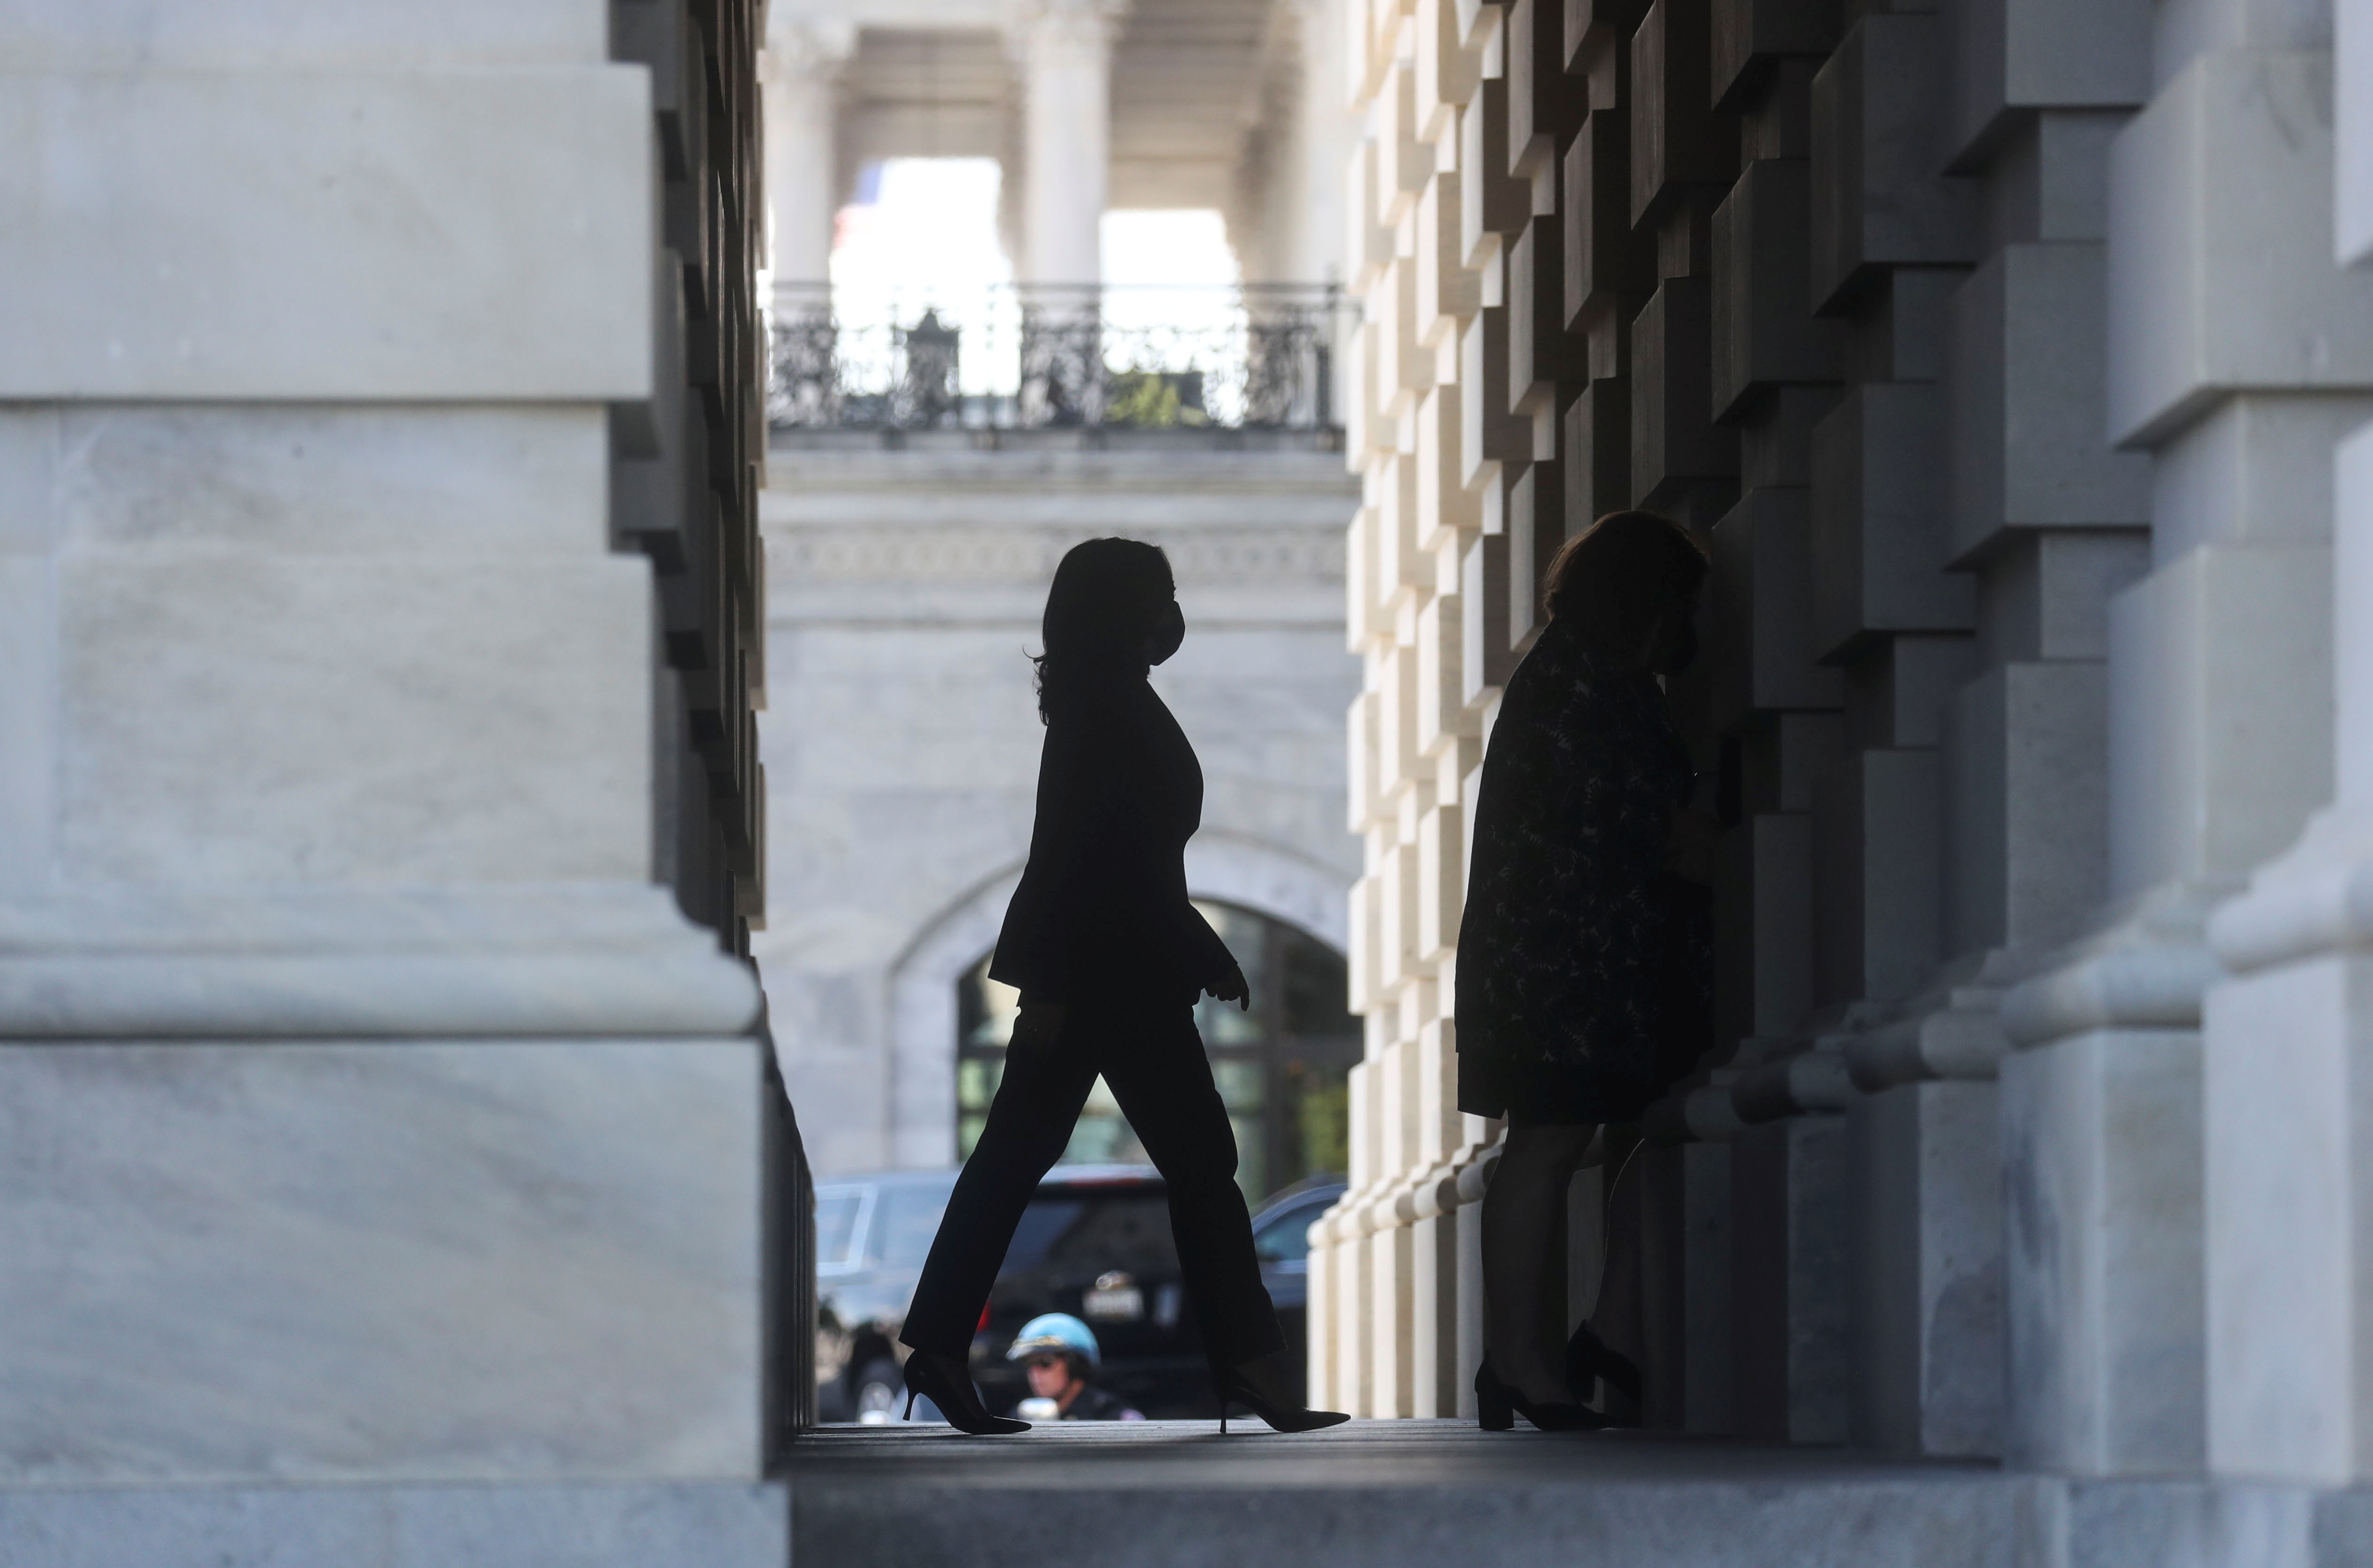 U.S. Vice President Kamala Harris arrives at the U.S. Capitol in Washington, U.S., September 30, 2021. REUTERS/Leah Millis